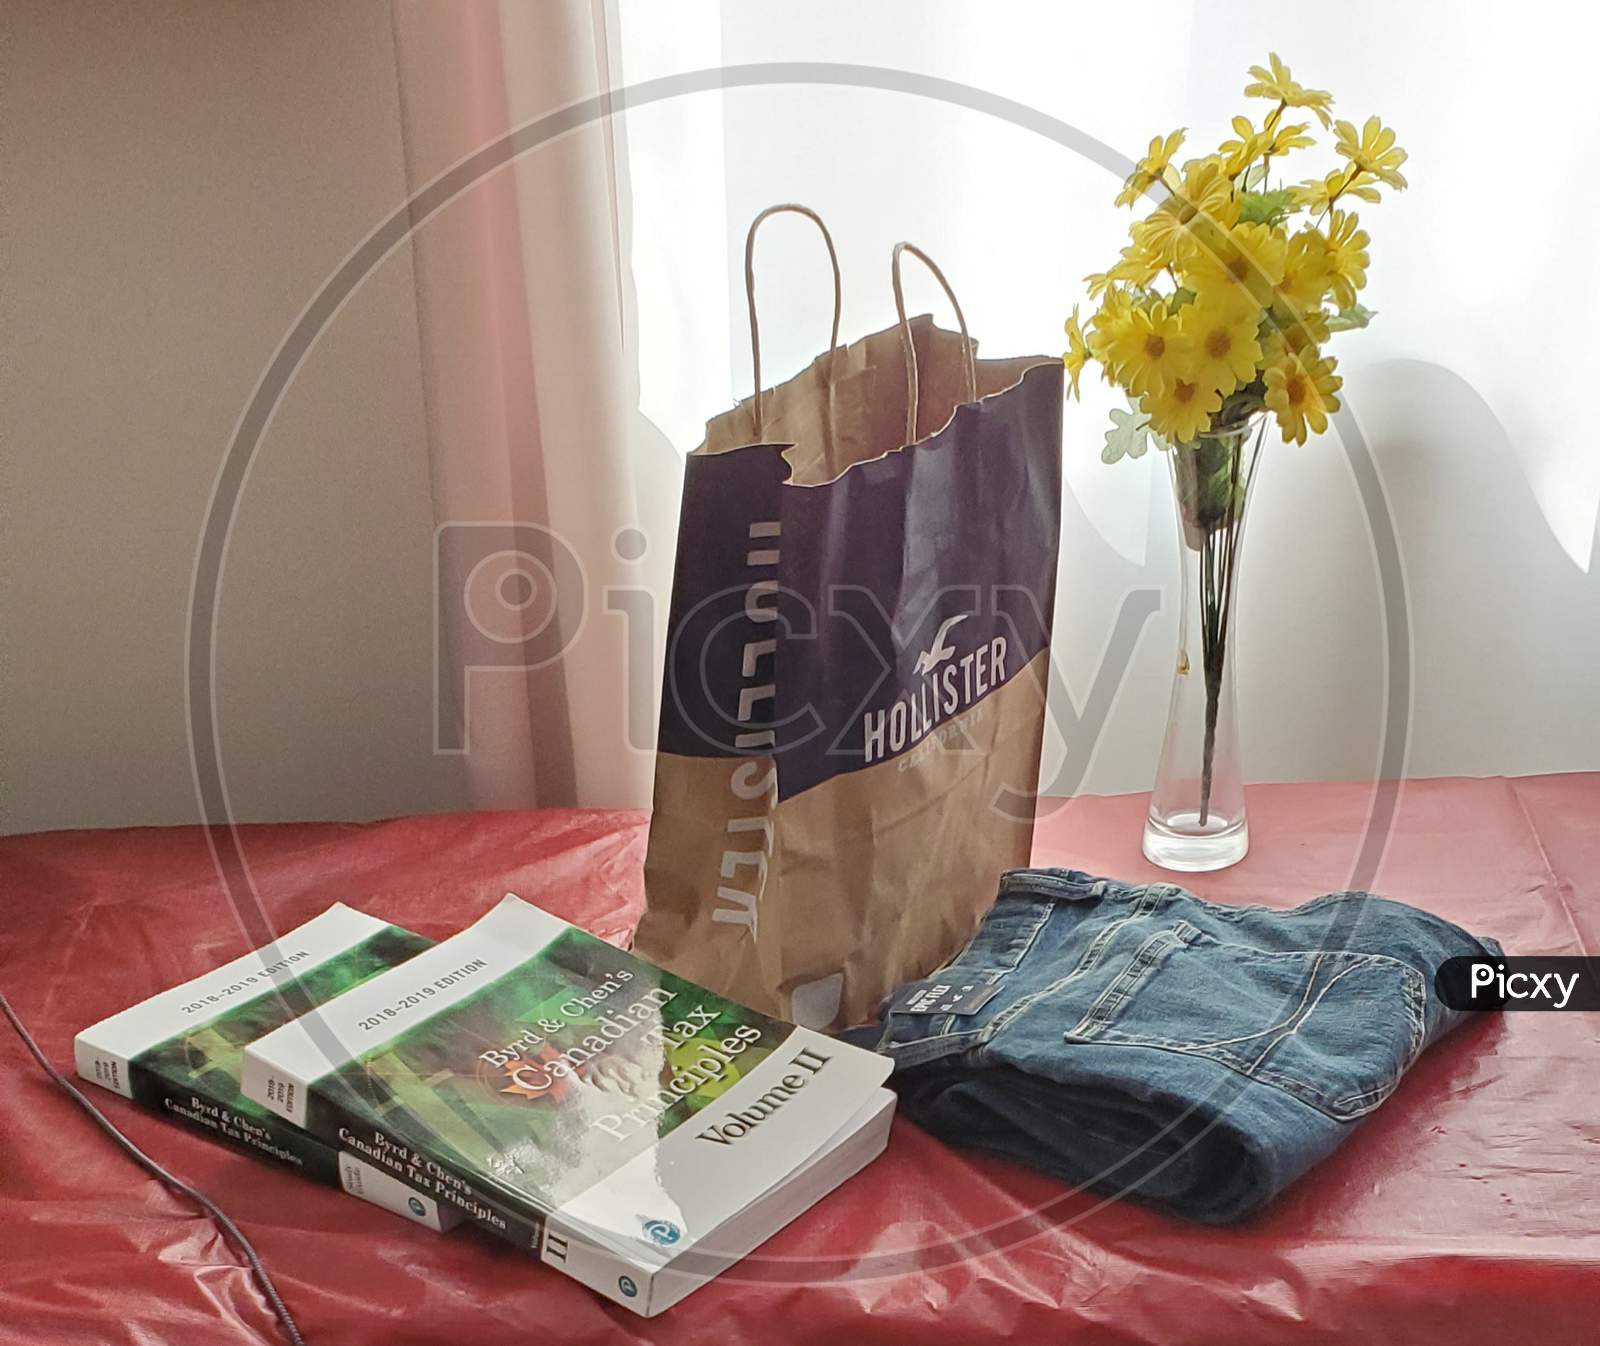 Plant,glass,paper bag,jeans